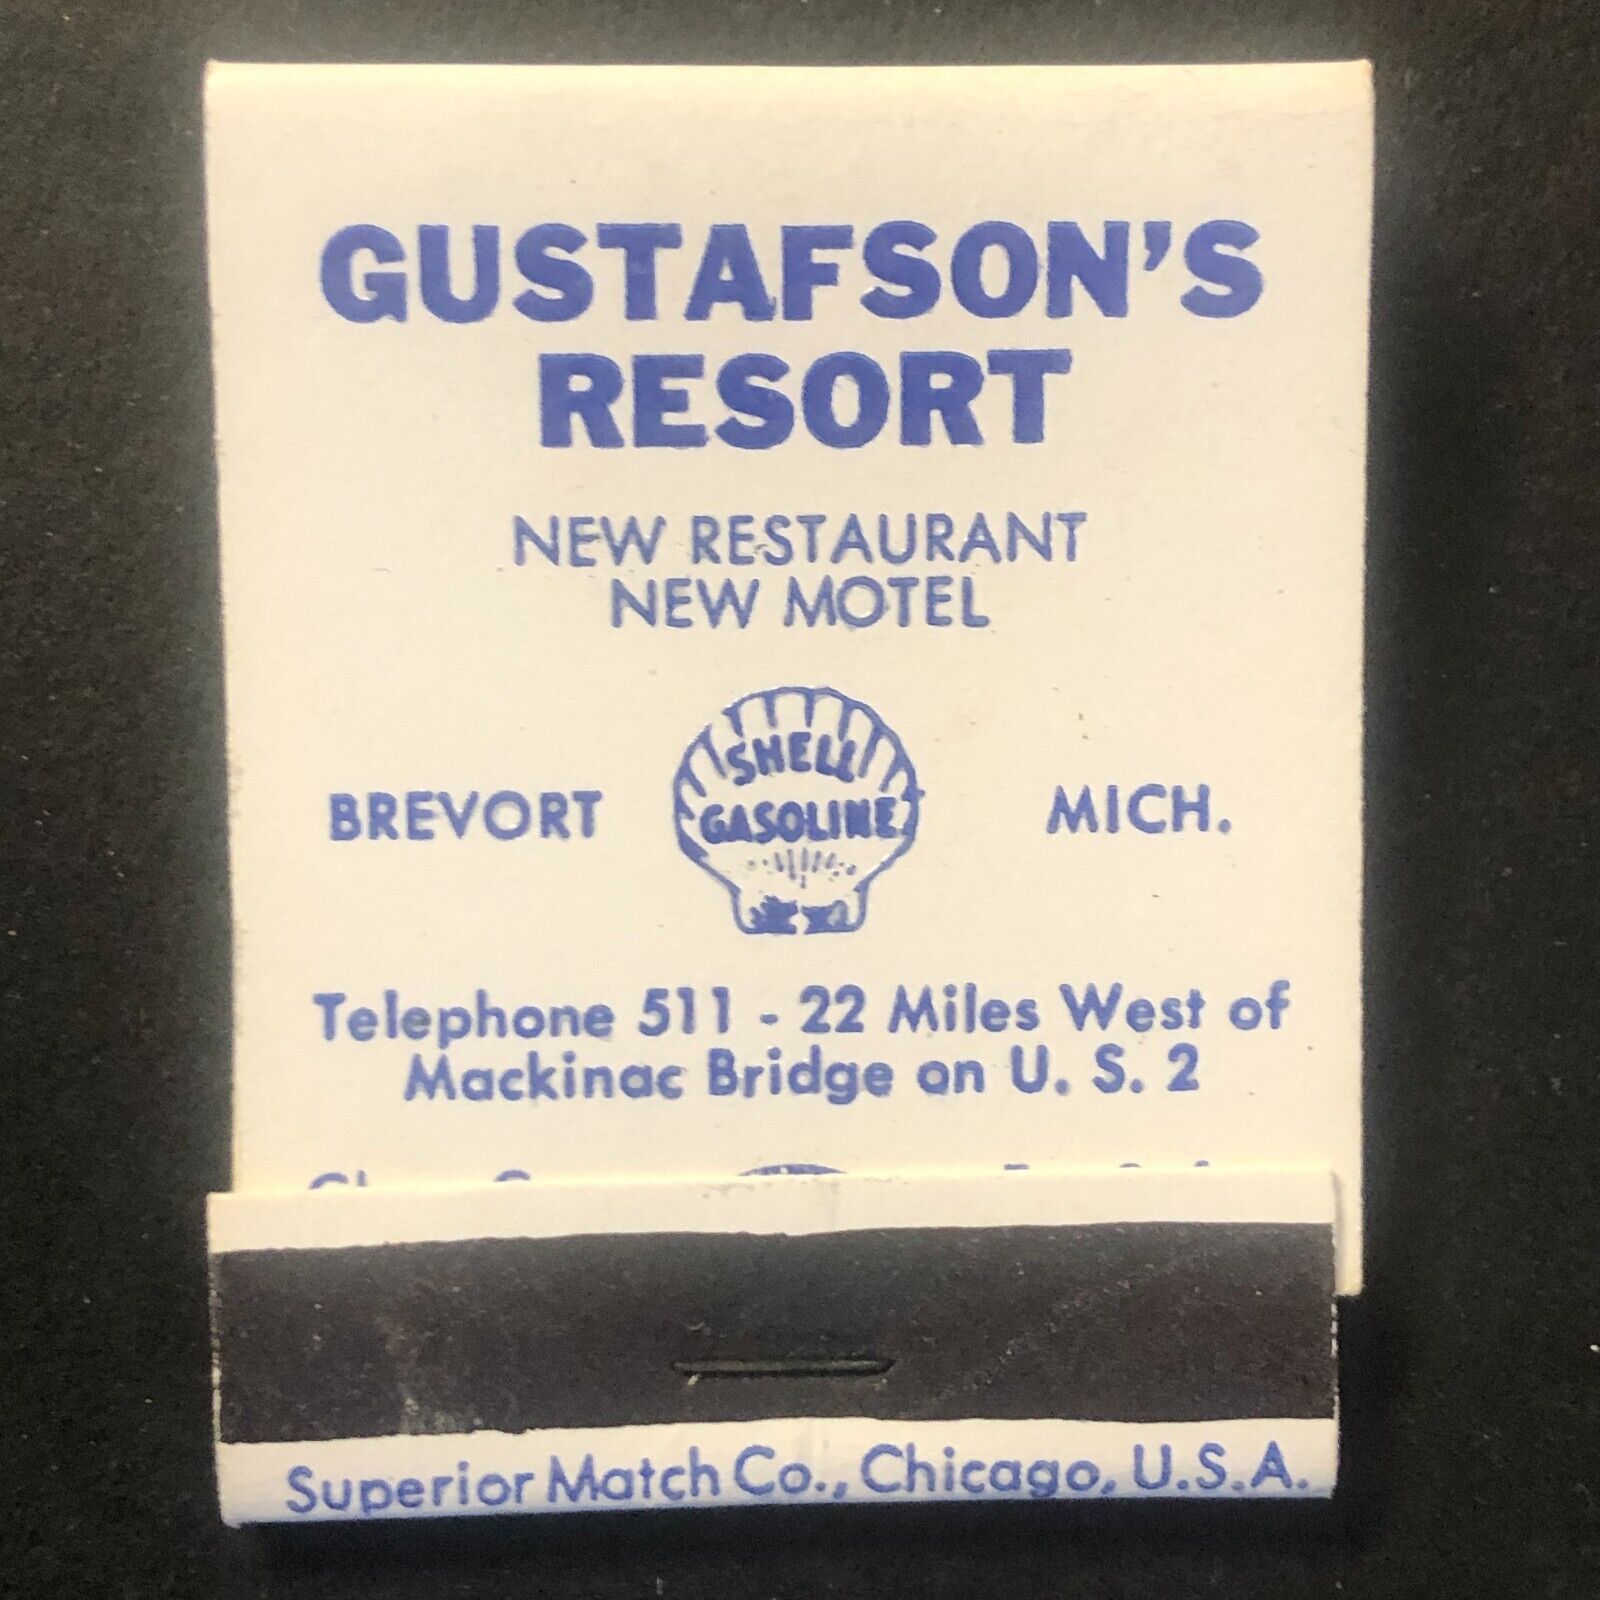 Gustafson's Resort Shell Gasoline Brevort, MI Vintage Matchbook c1960's VGC